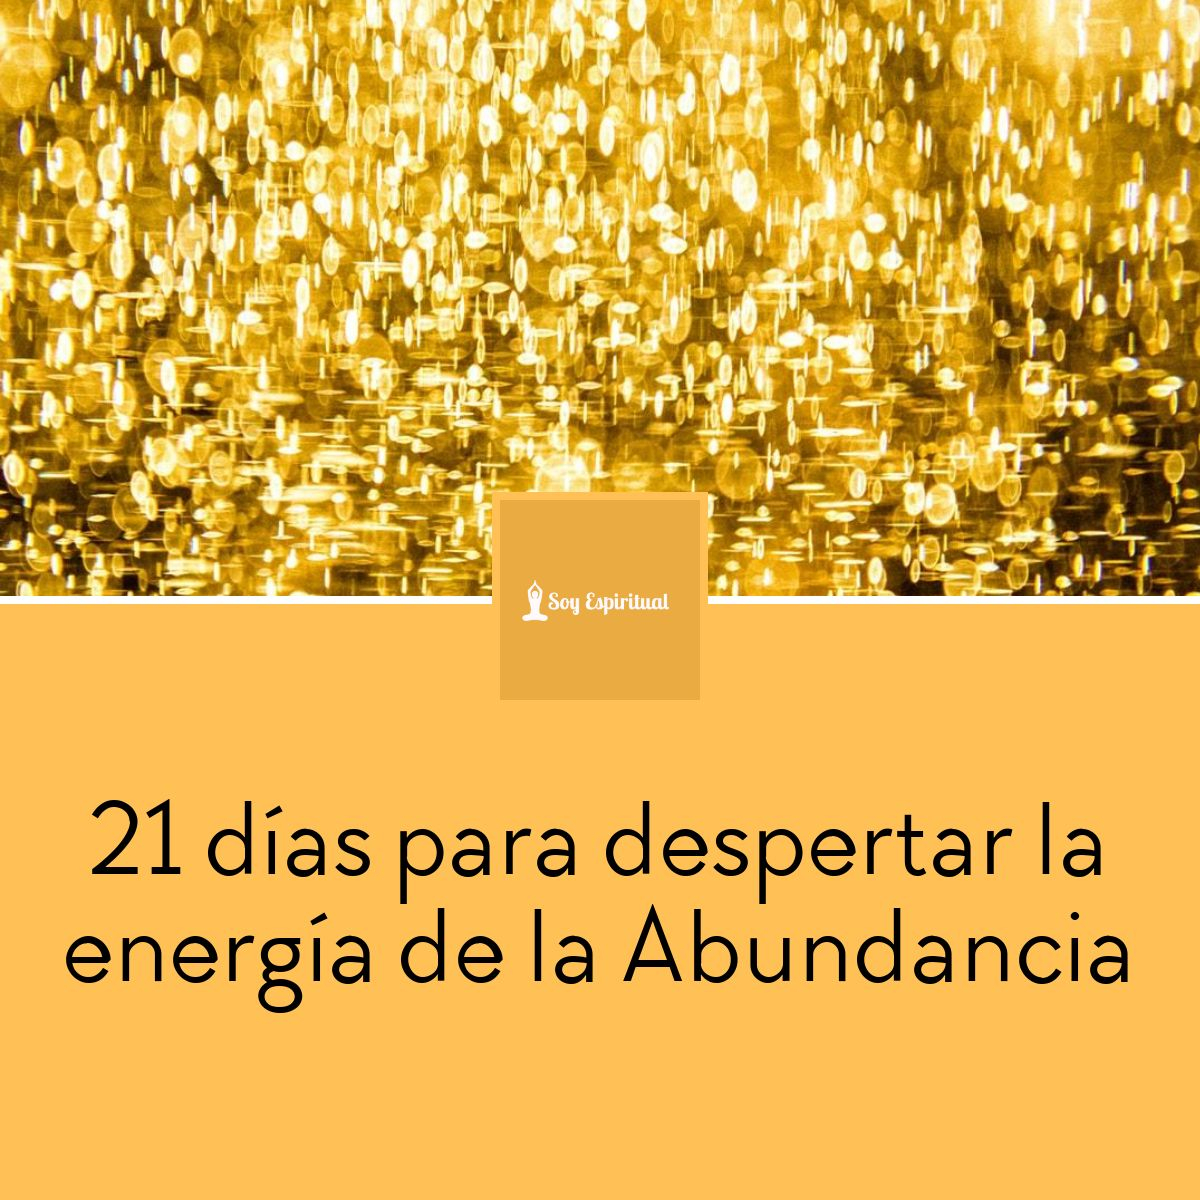 21_das_para_despertar_la_energa_de_la_Abundancia